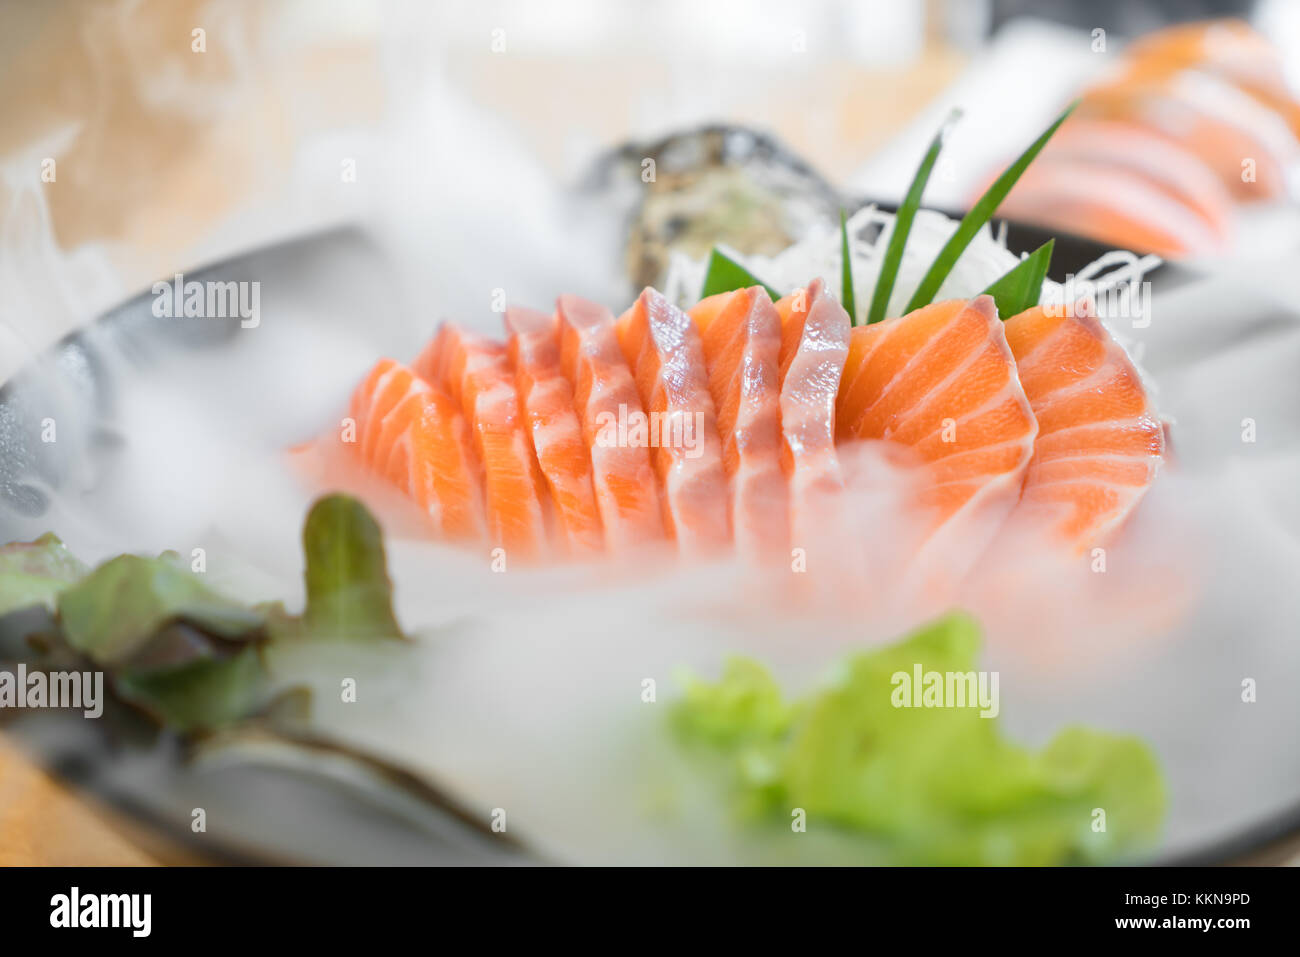 Japan raw salmon slice or salmon sashimi in Japanese style fresh serve on ice in Japanese restaurant. Stock Photo